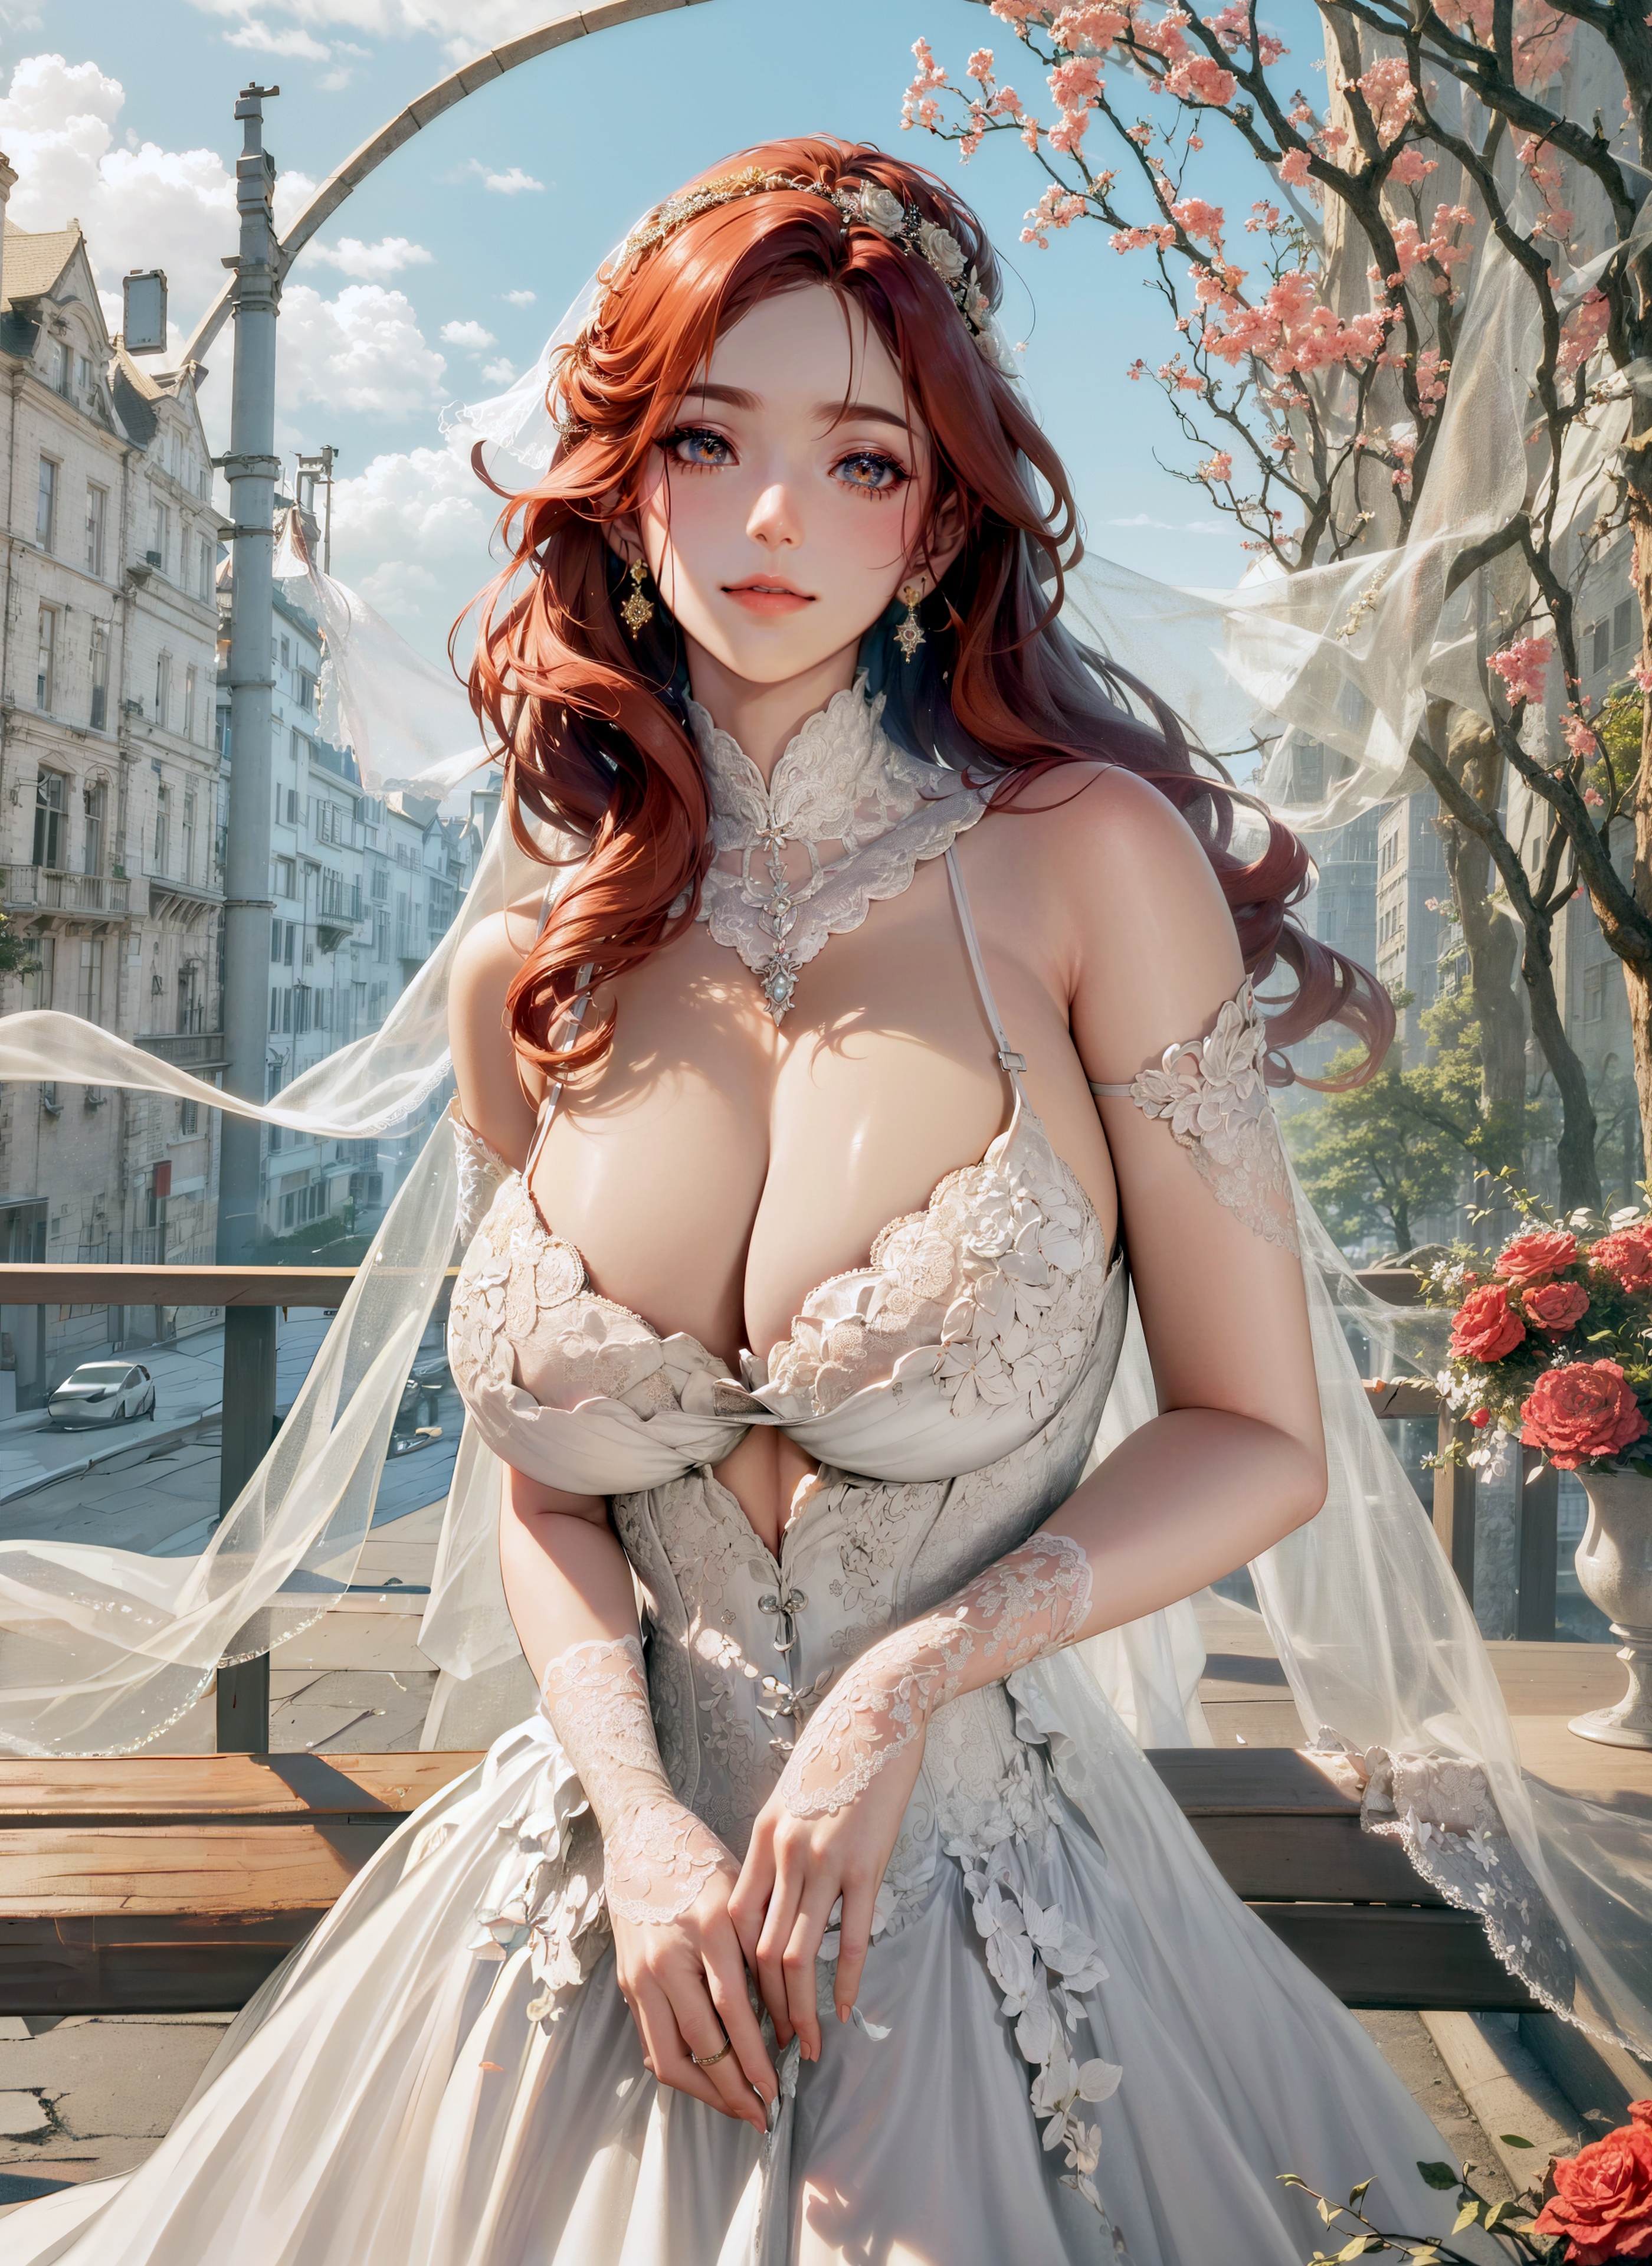 A busty Asian bride